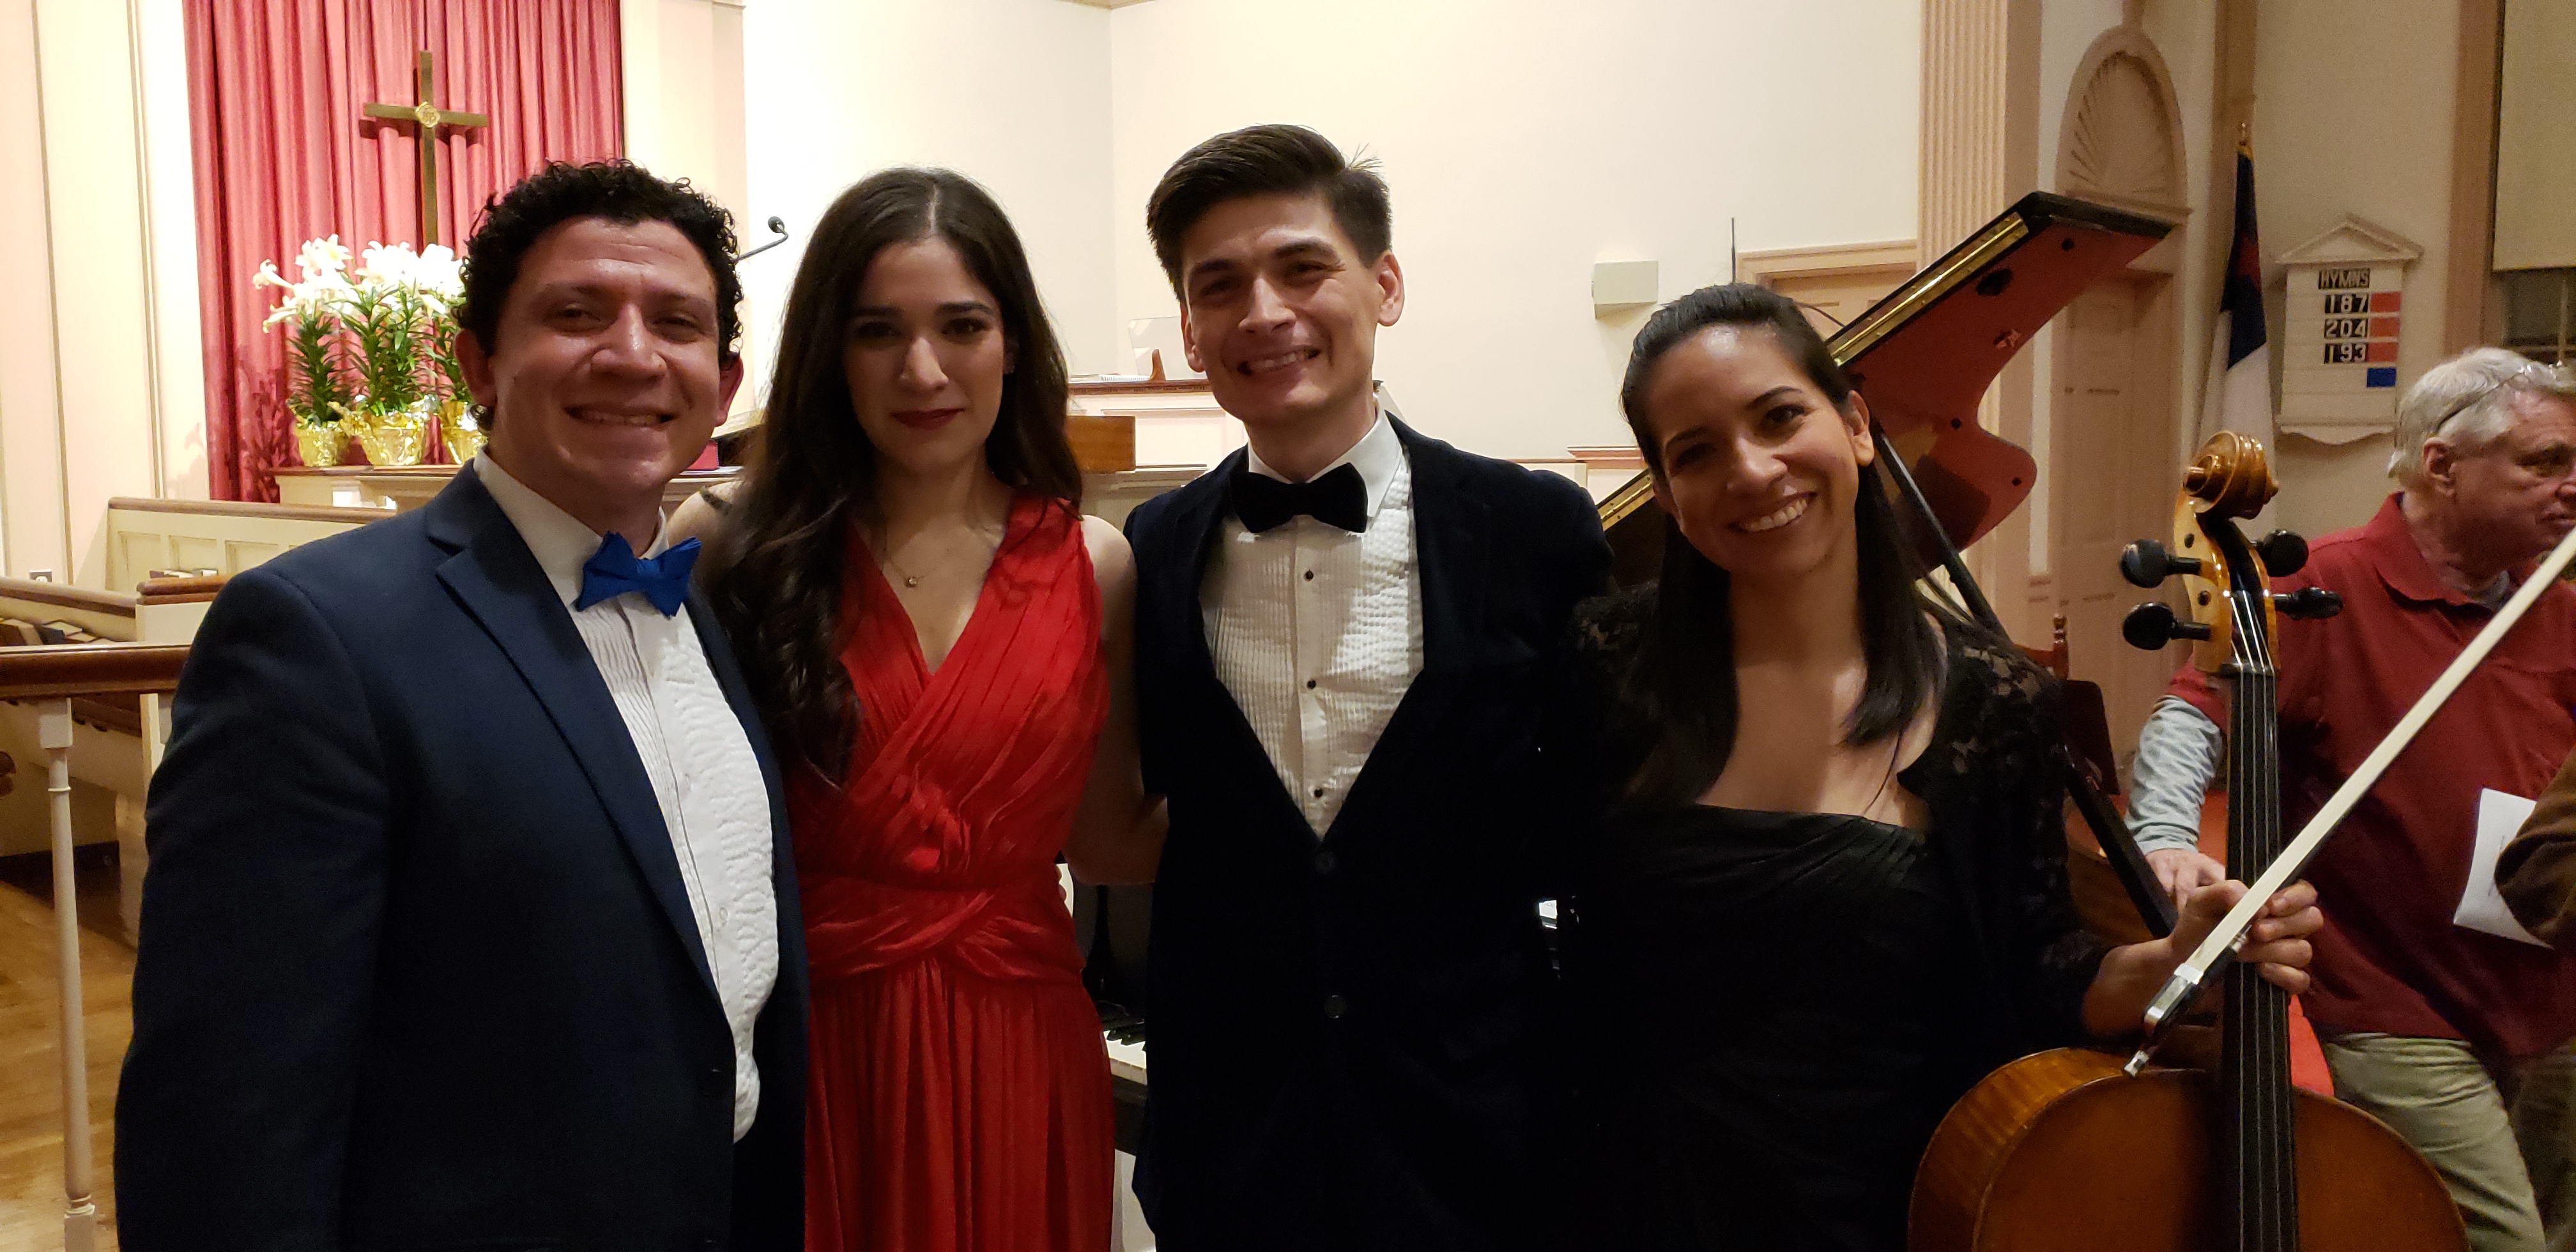 Concert w David, Ana, Francisco & Taide, April 28, 2019